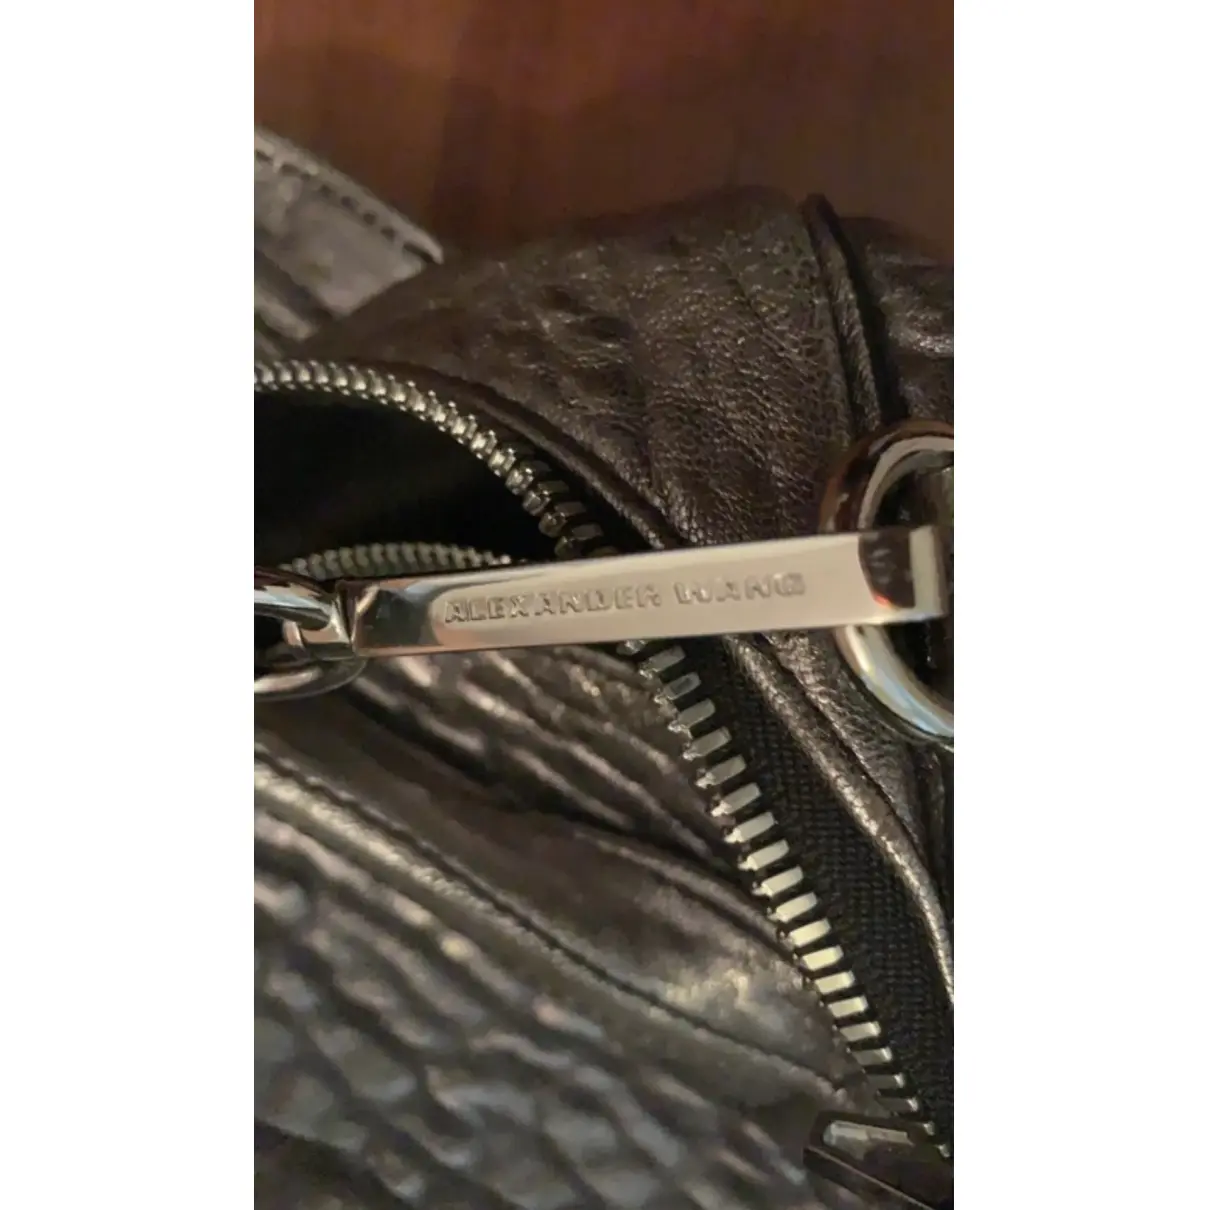 Rockie leather handbag Alexander Wang